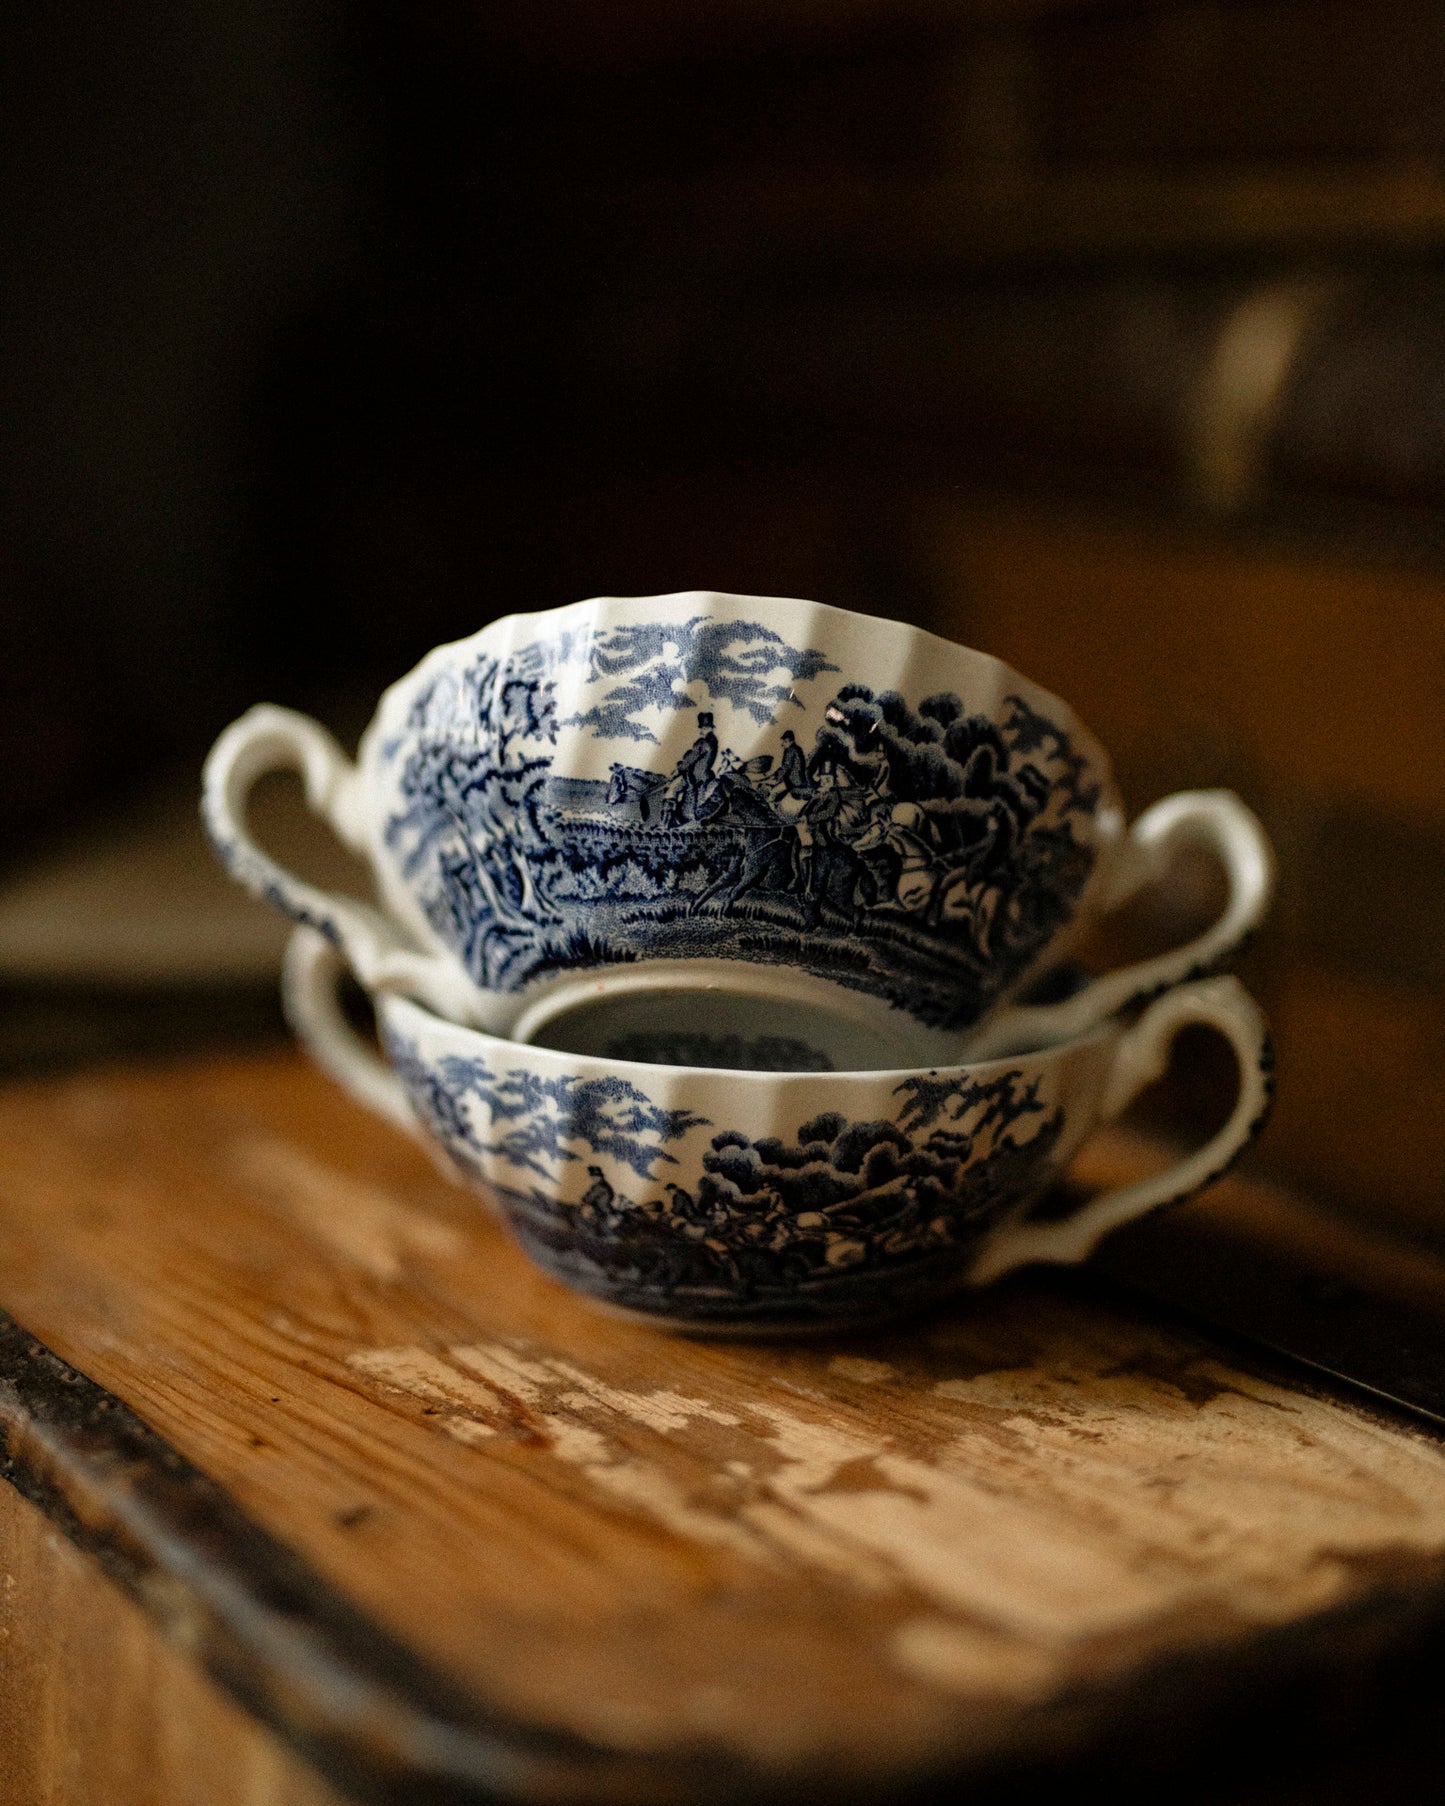 Myotts Staffordshire ware set of teacups